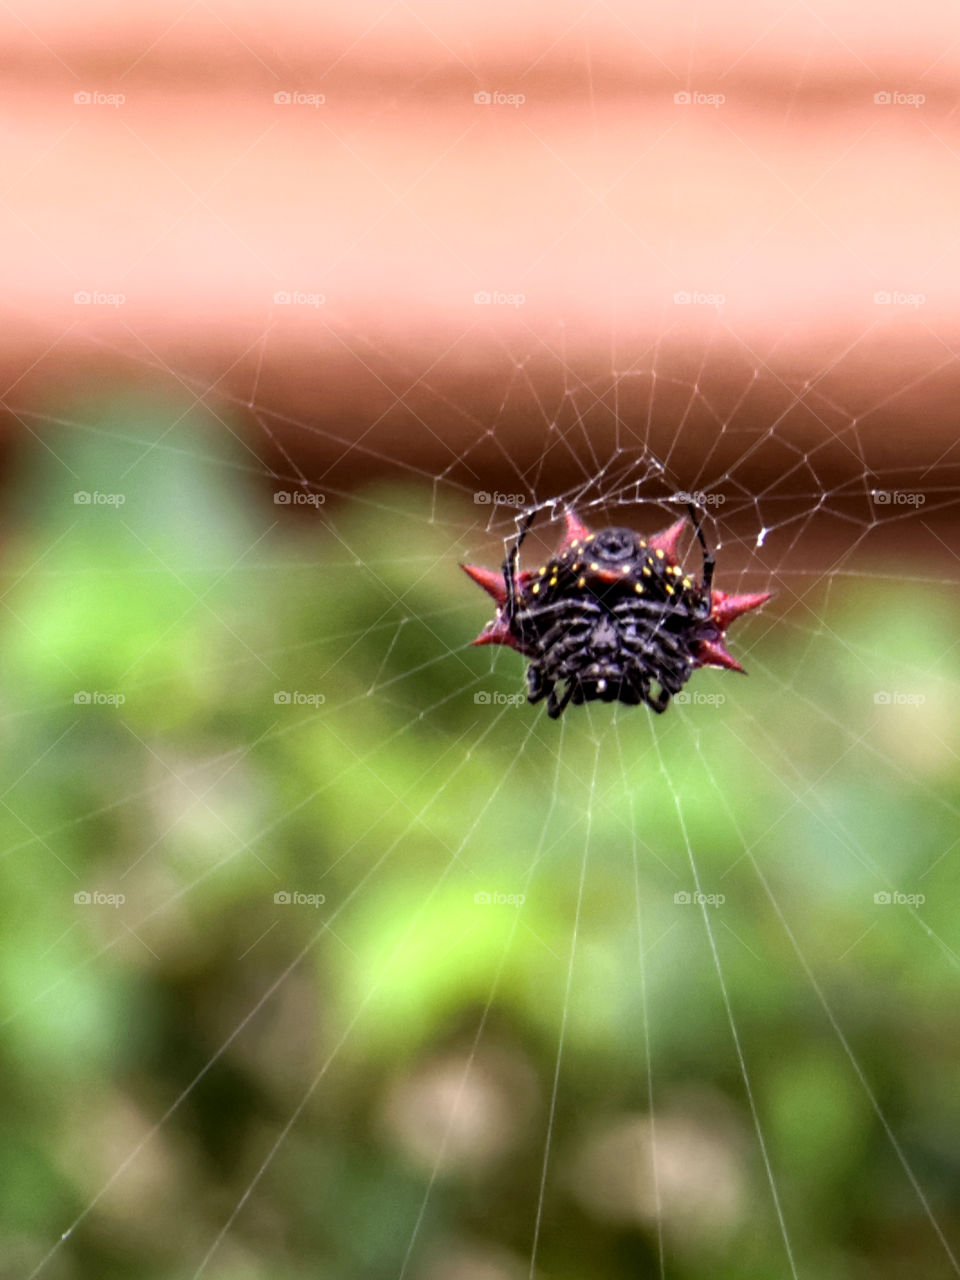 Spiny Orb Weaver spider on web. Spiny Orb Weaver spider on web